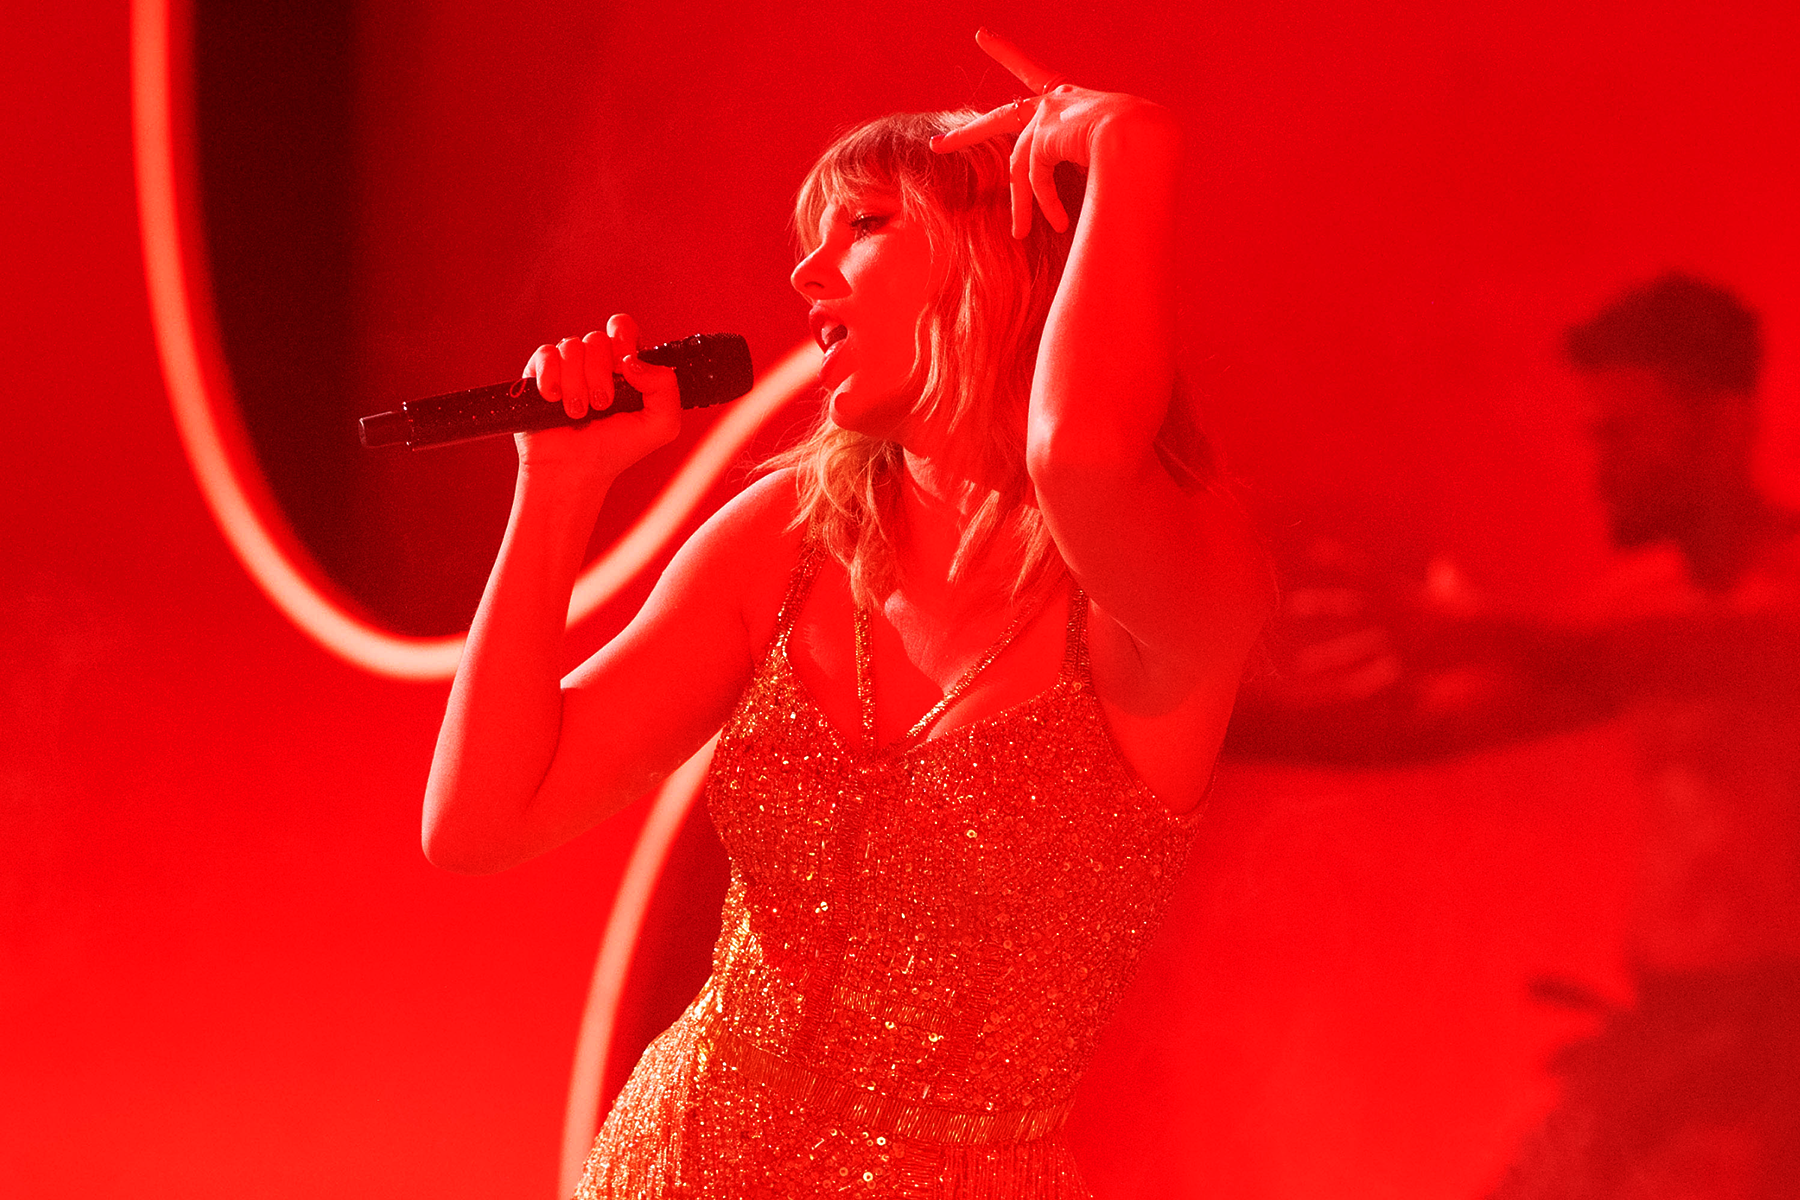 BirthdaySpecial: 6 Most Relatable Lyrics From Taylor Swift